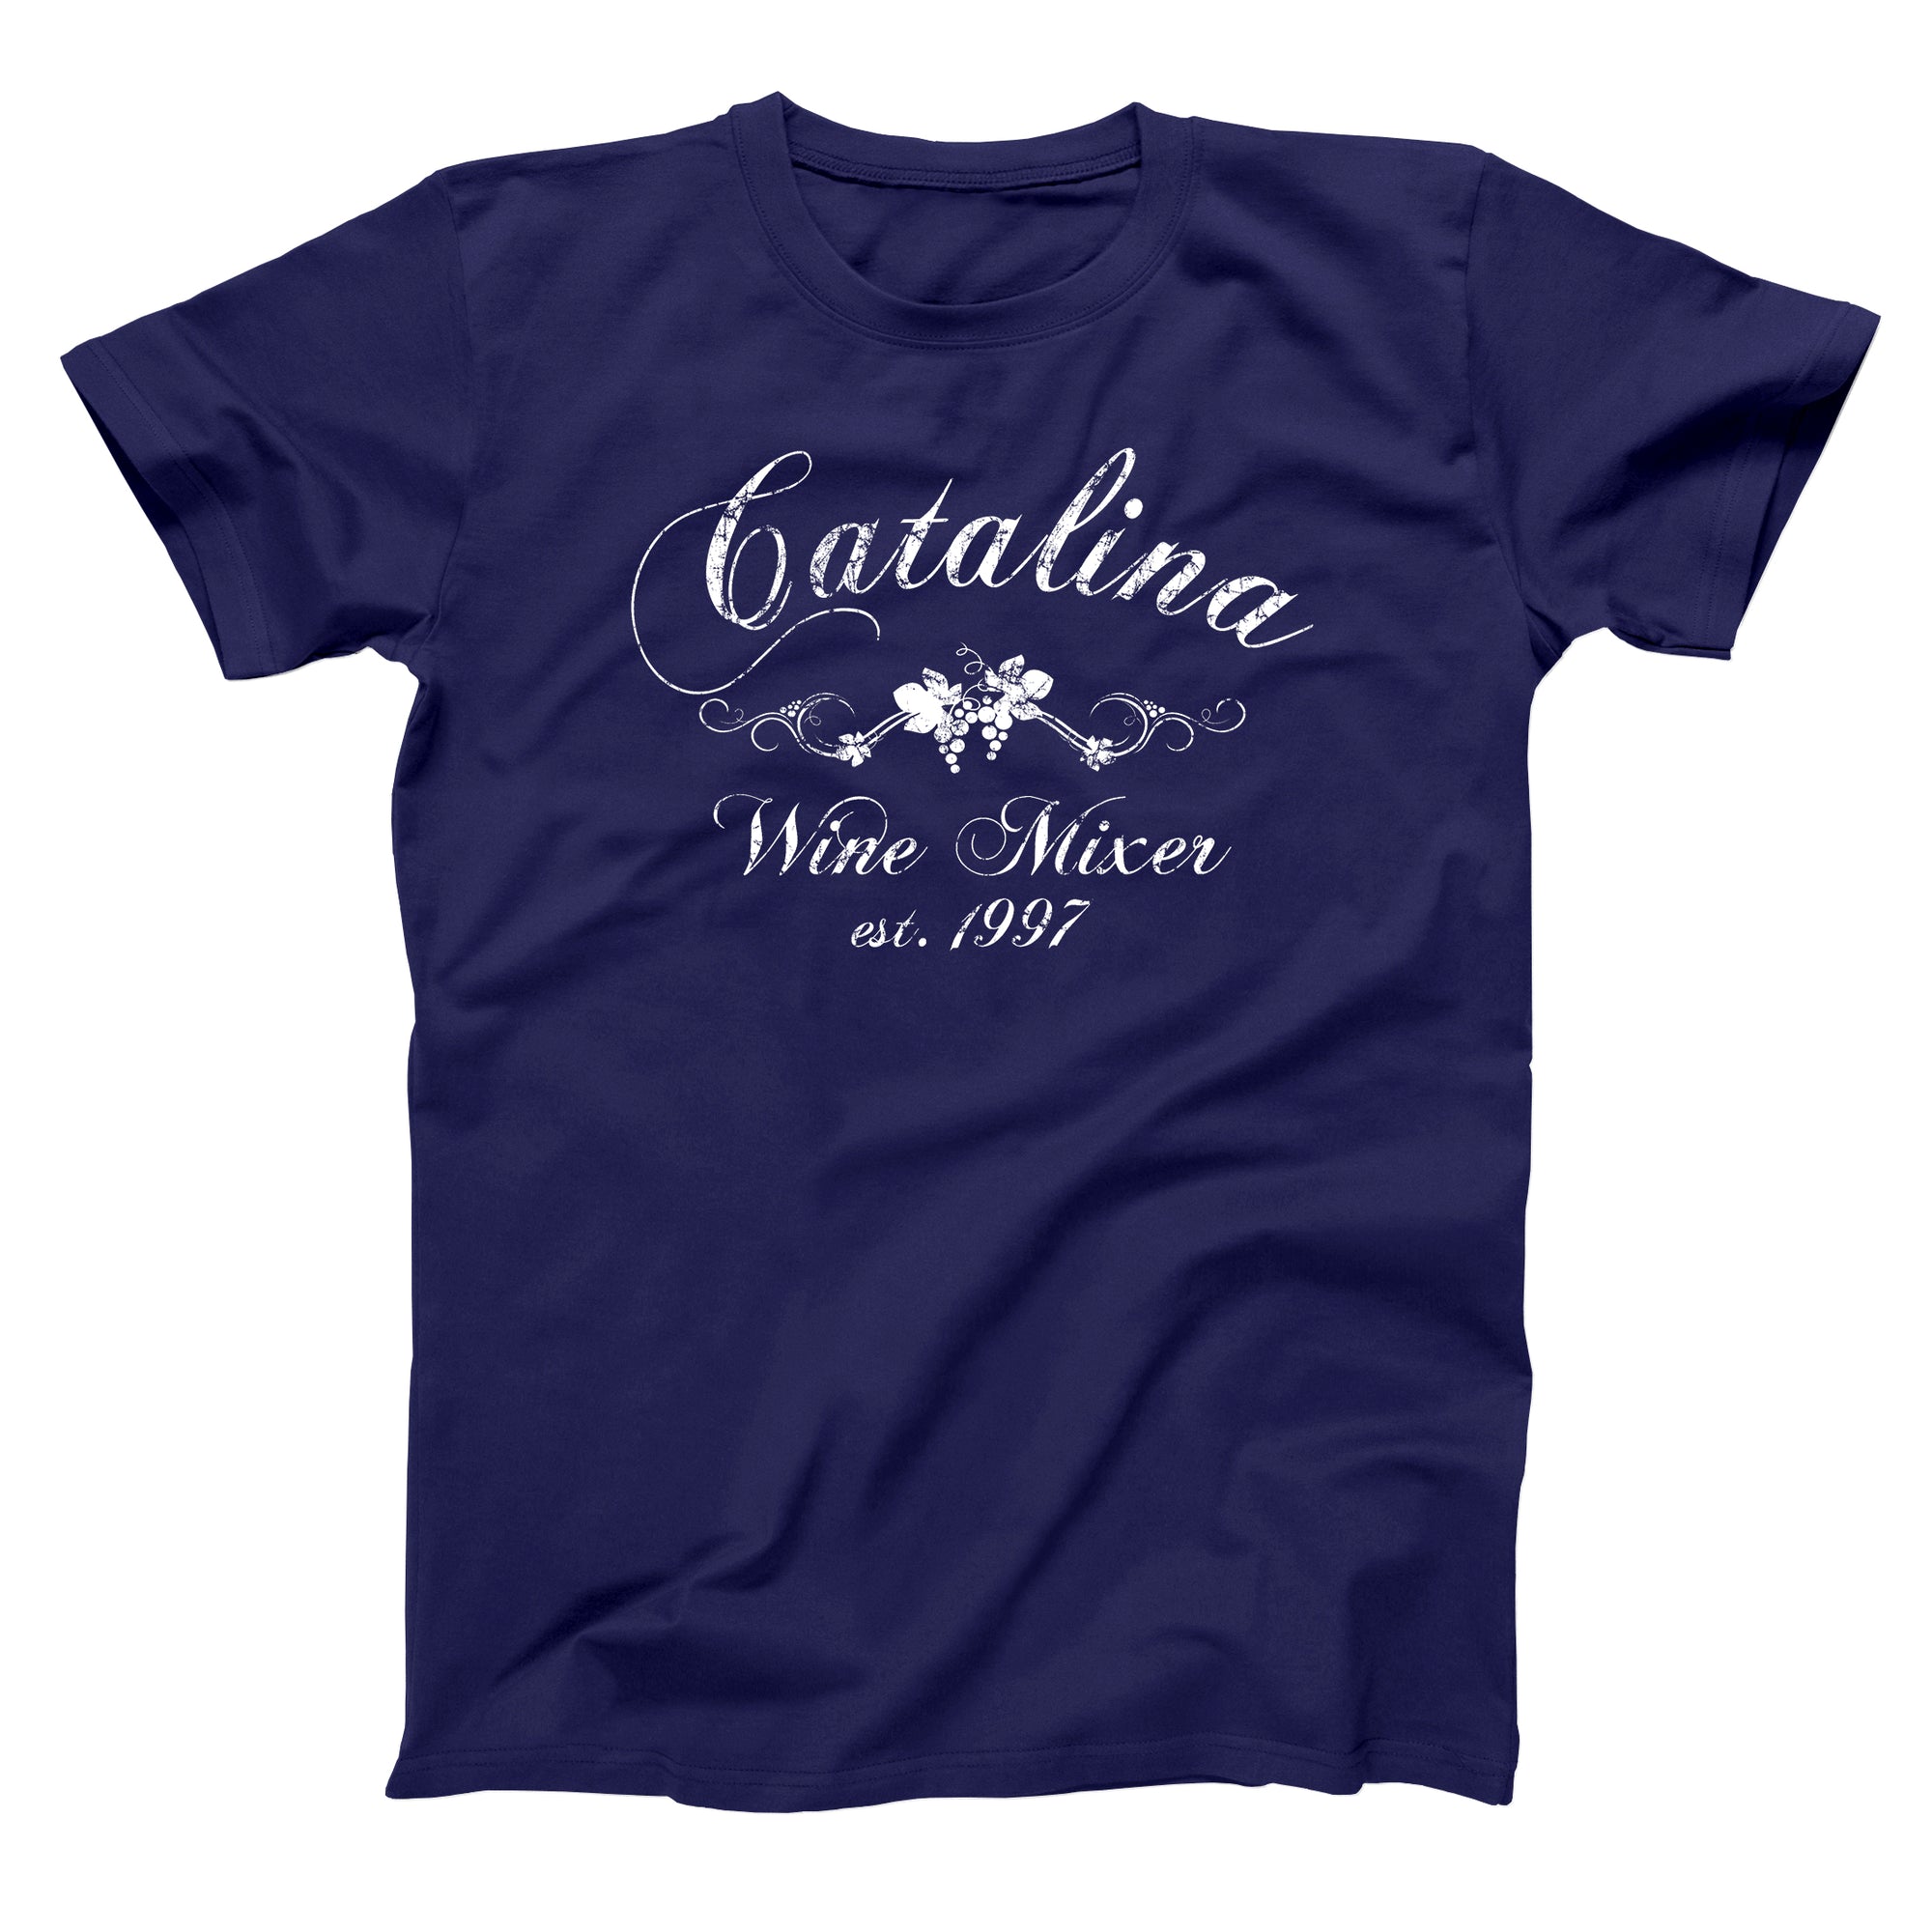 The Catalina Wine Mixer